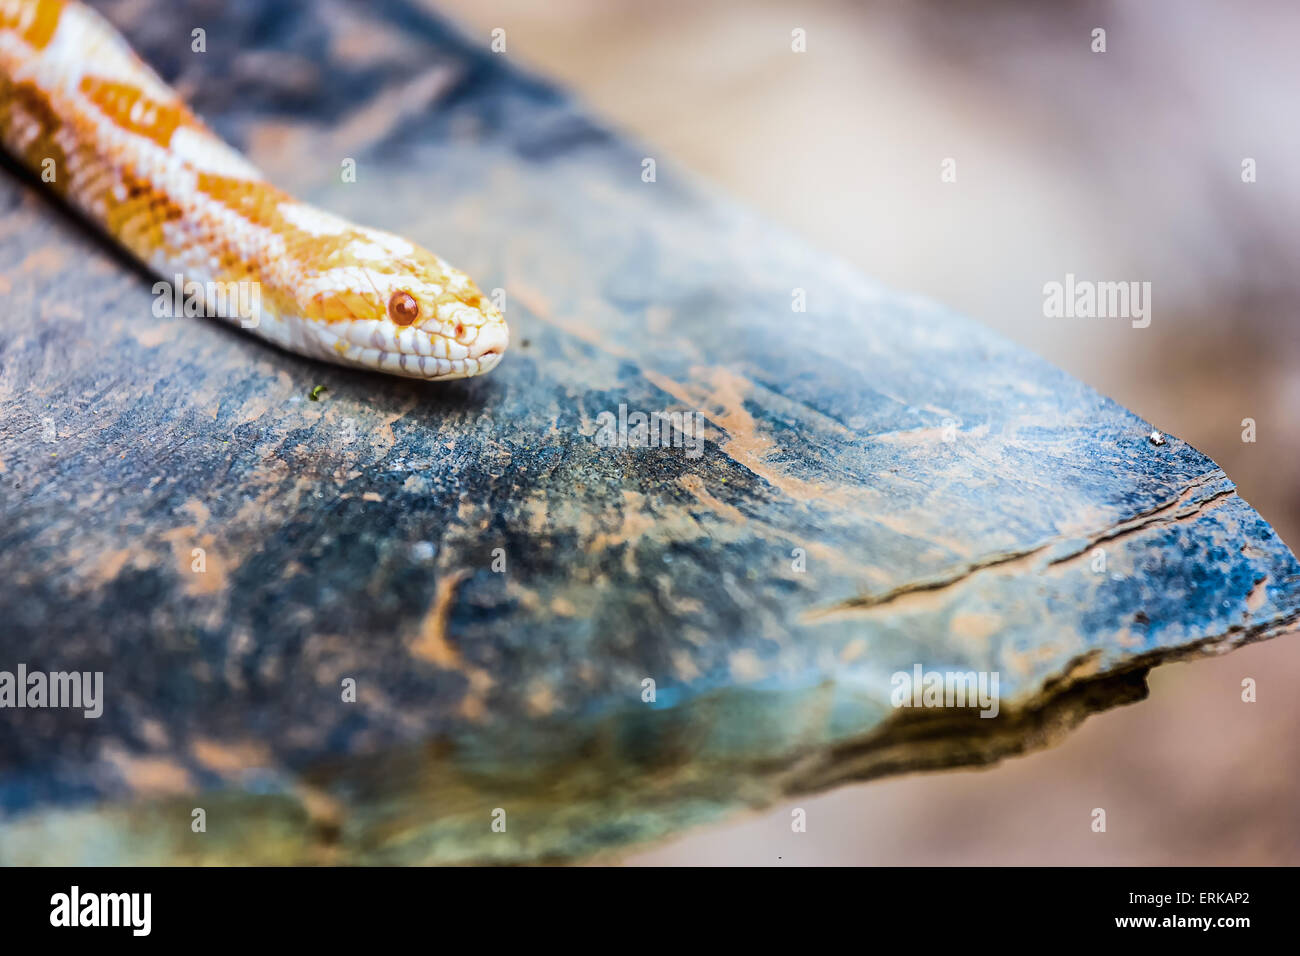 Albino Gopher Snake or Lambent albino python lying or crawling on stone Stock Photo